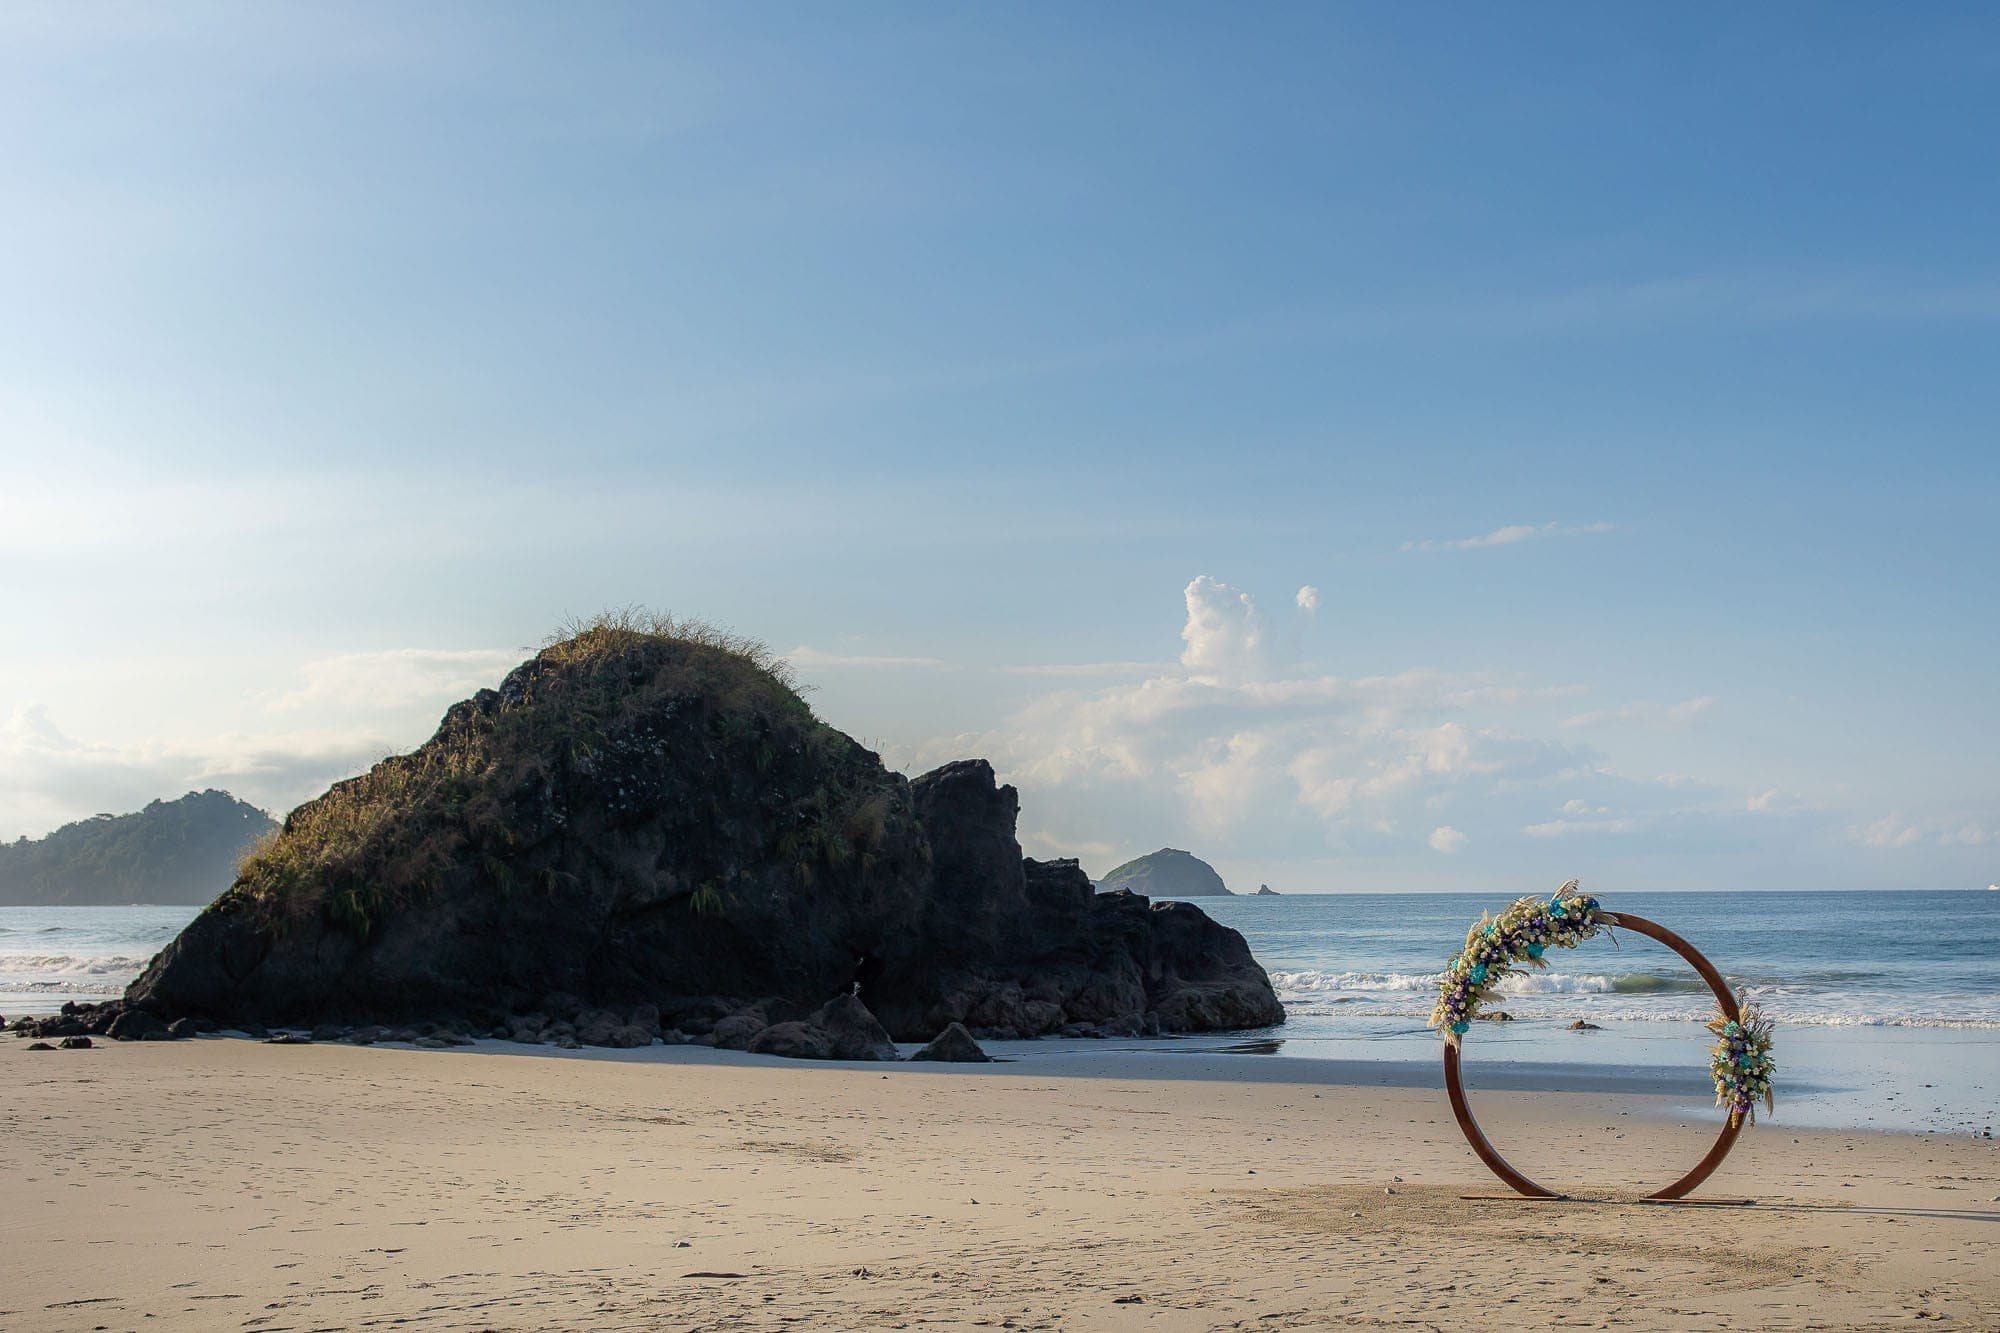 Circular arbor on the beach waiting for the wedding couple